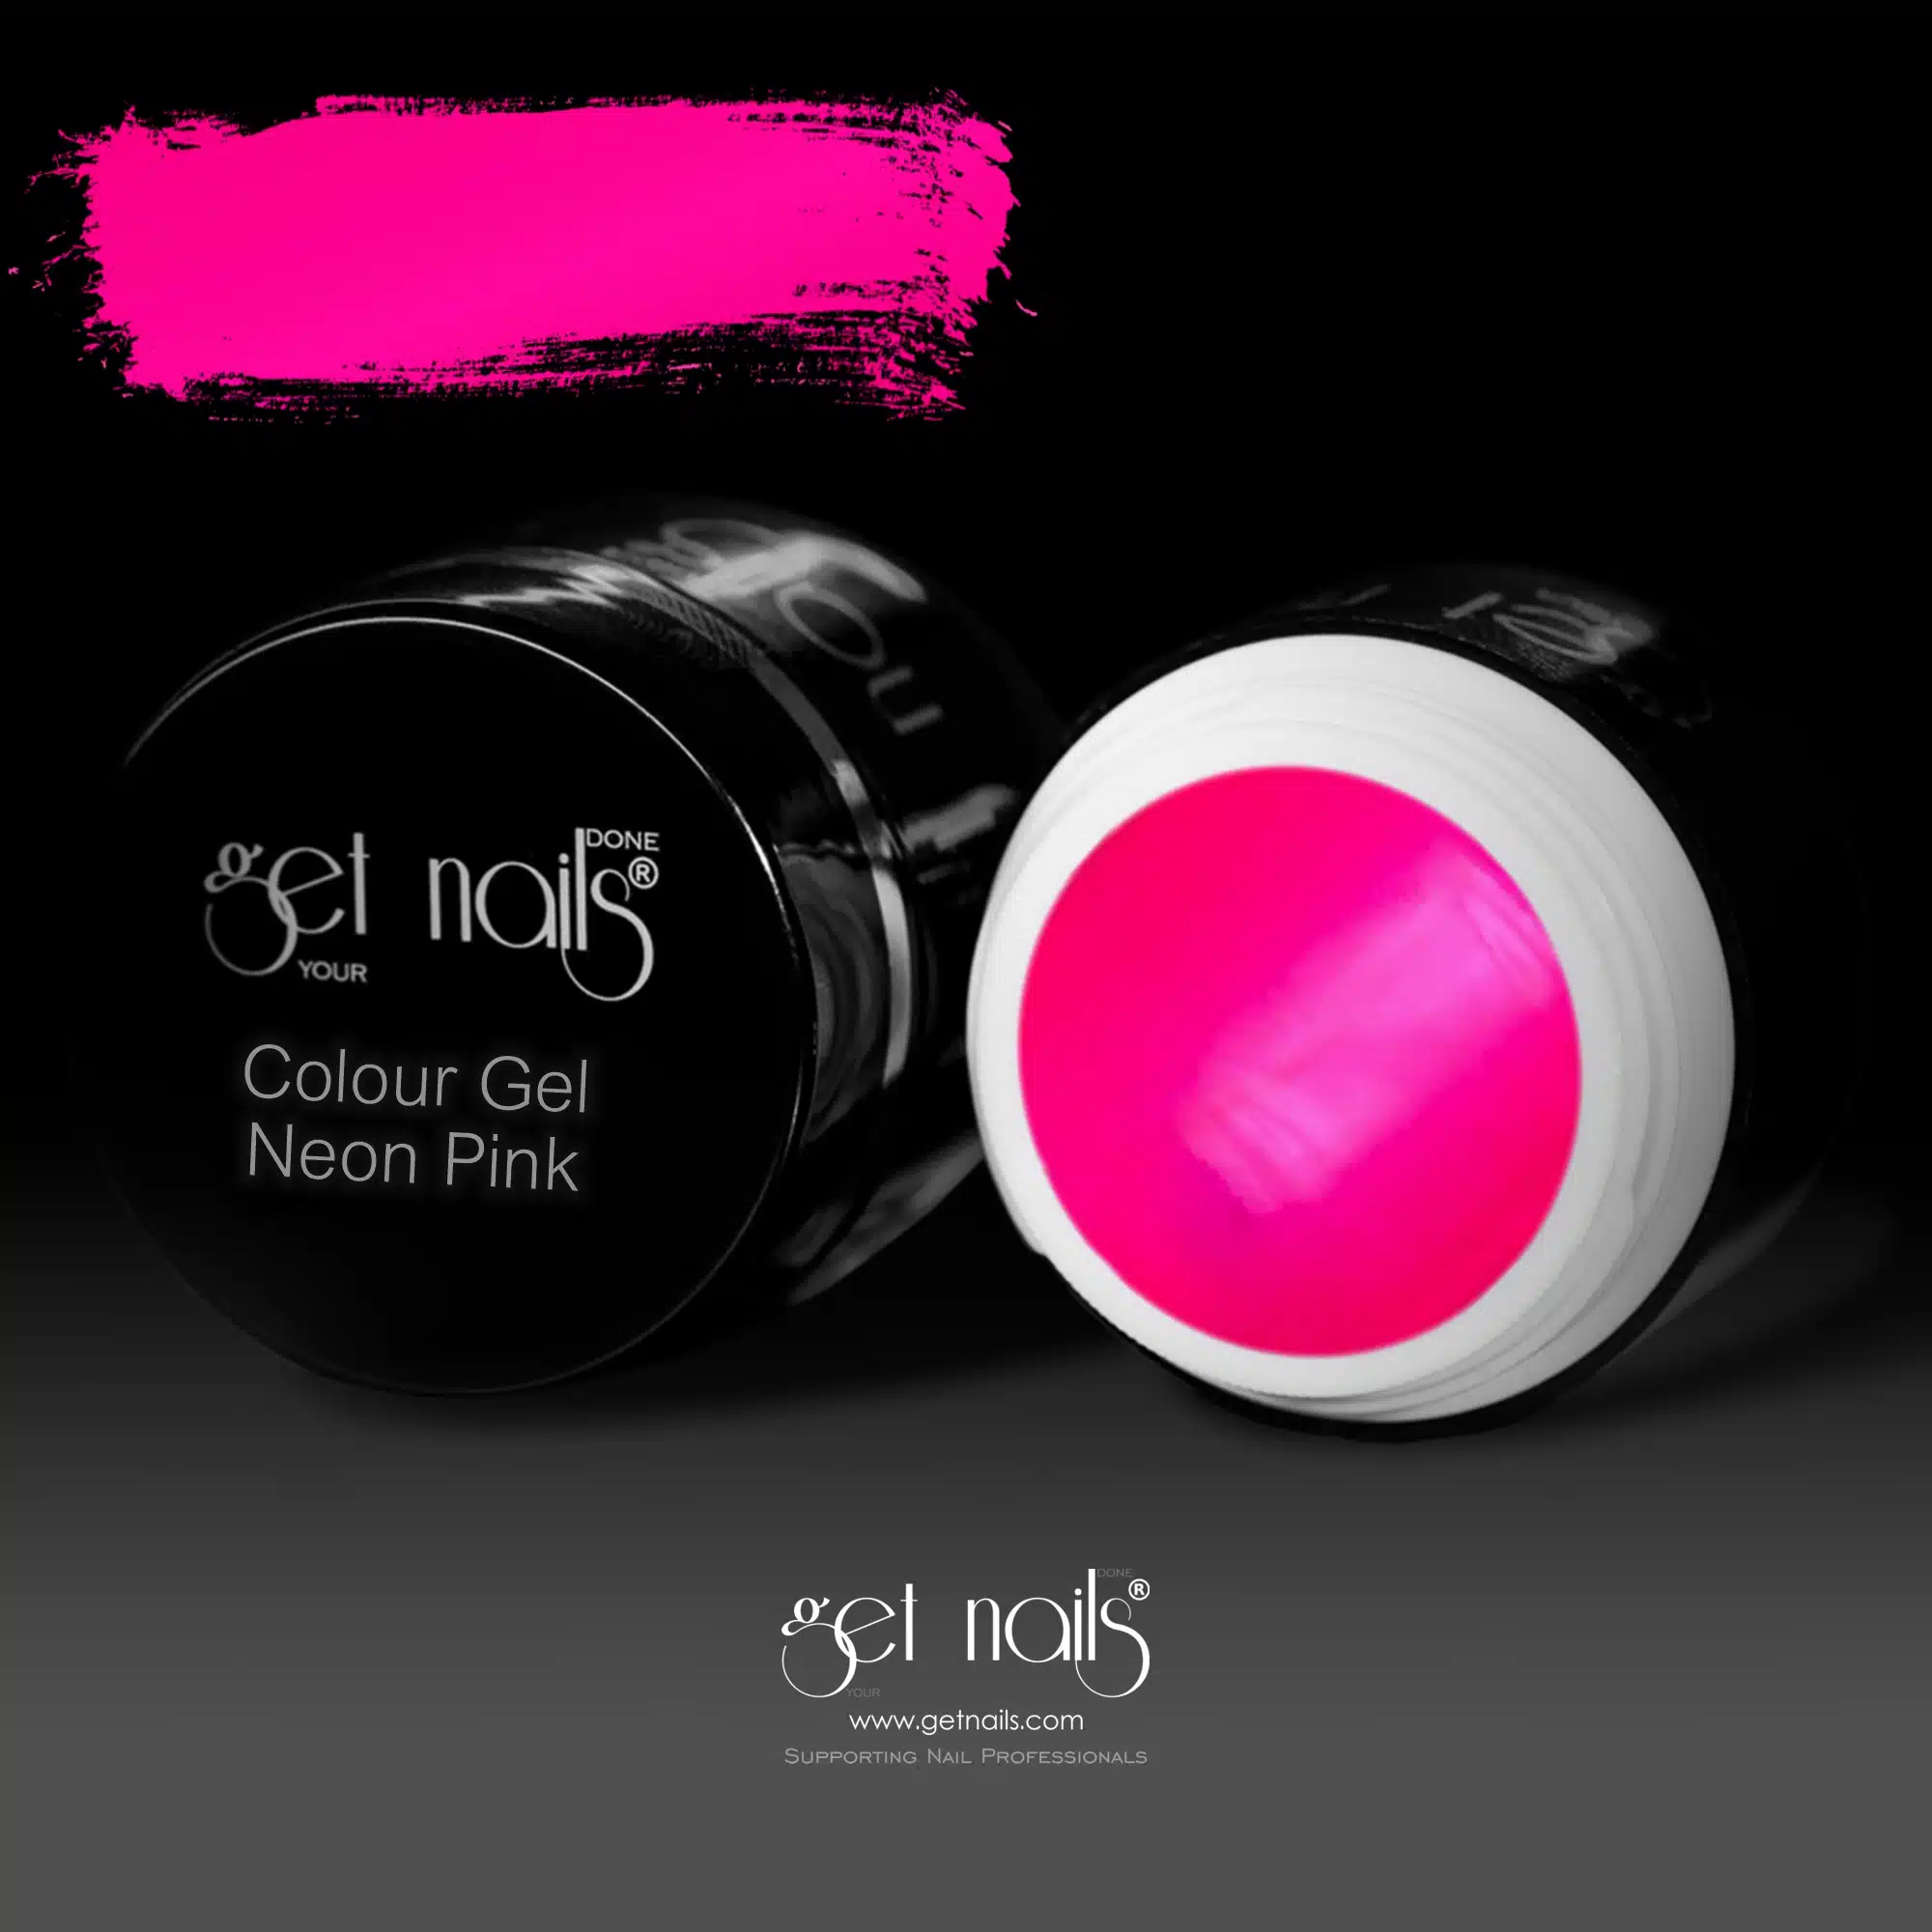 Get Nails Austria - Color Gel Neon Pink 5g